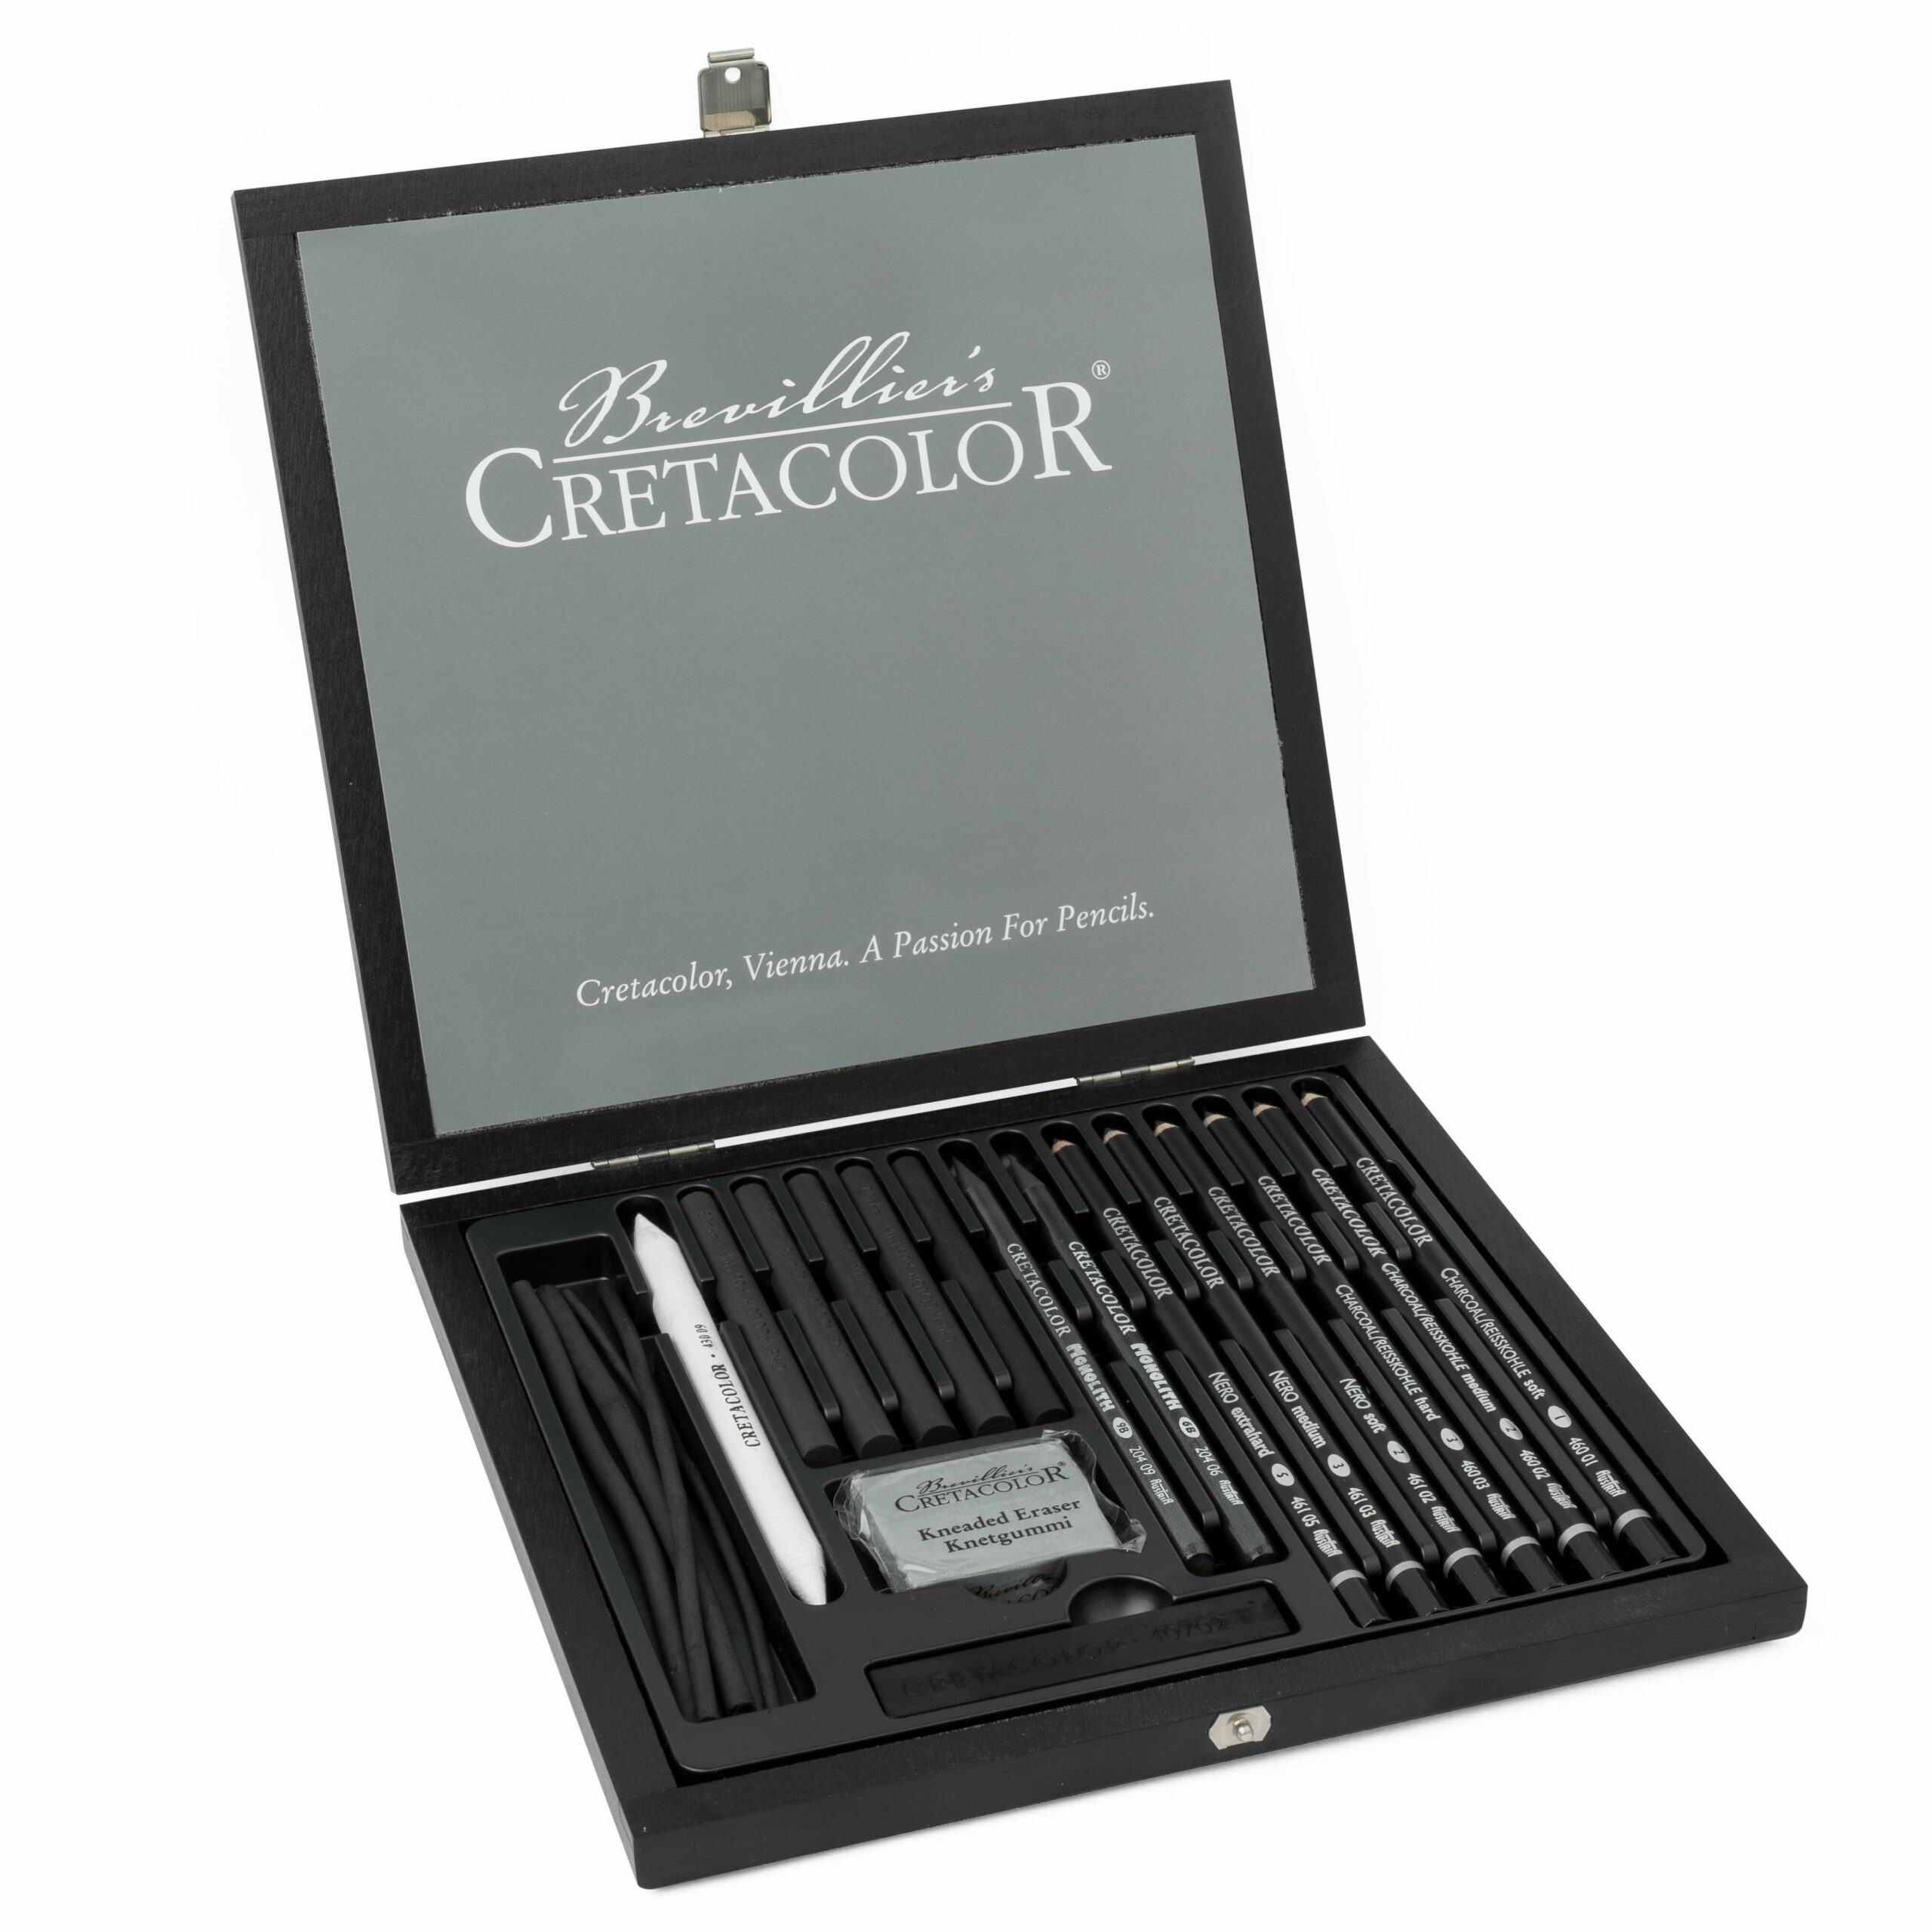 cretacolor black box charcoal drawing set of 20 - tin box 